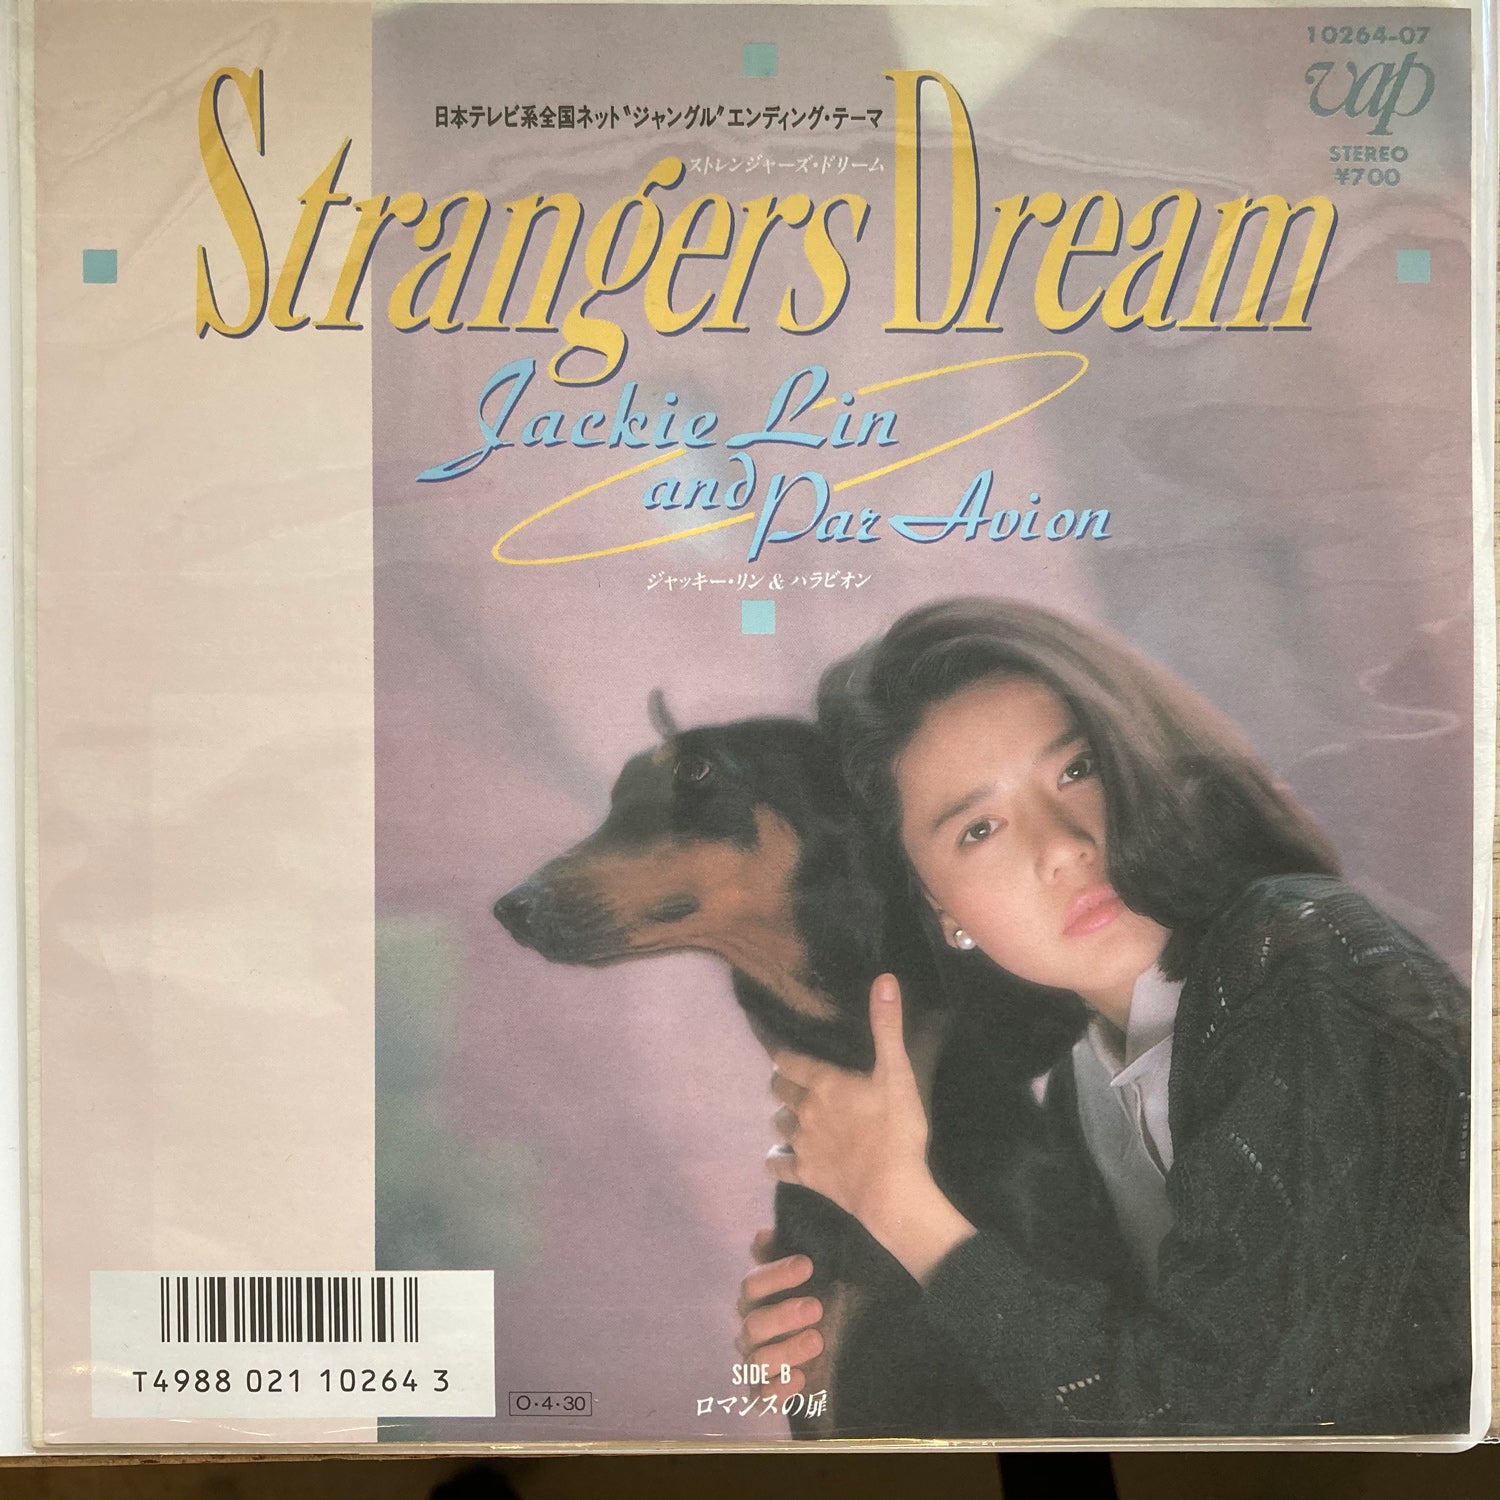 Jackie Lin and Par Avion - Strangers Dream (7")